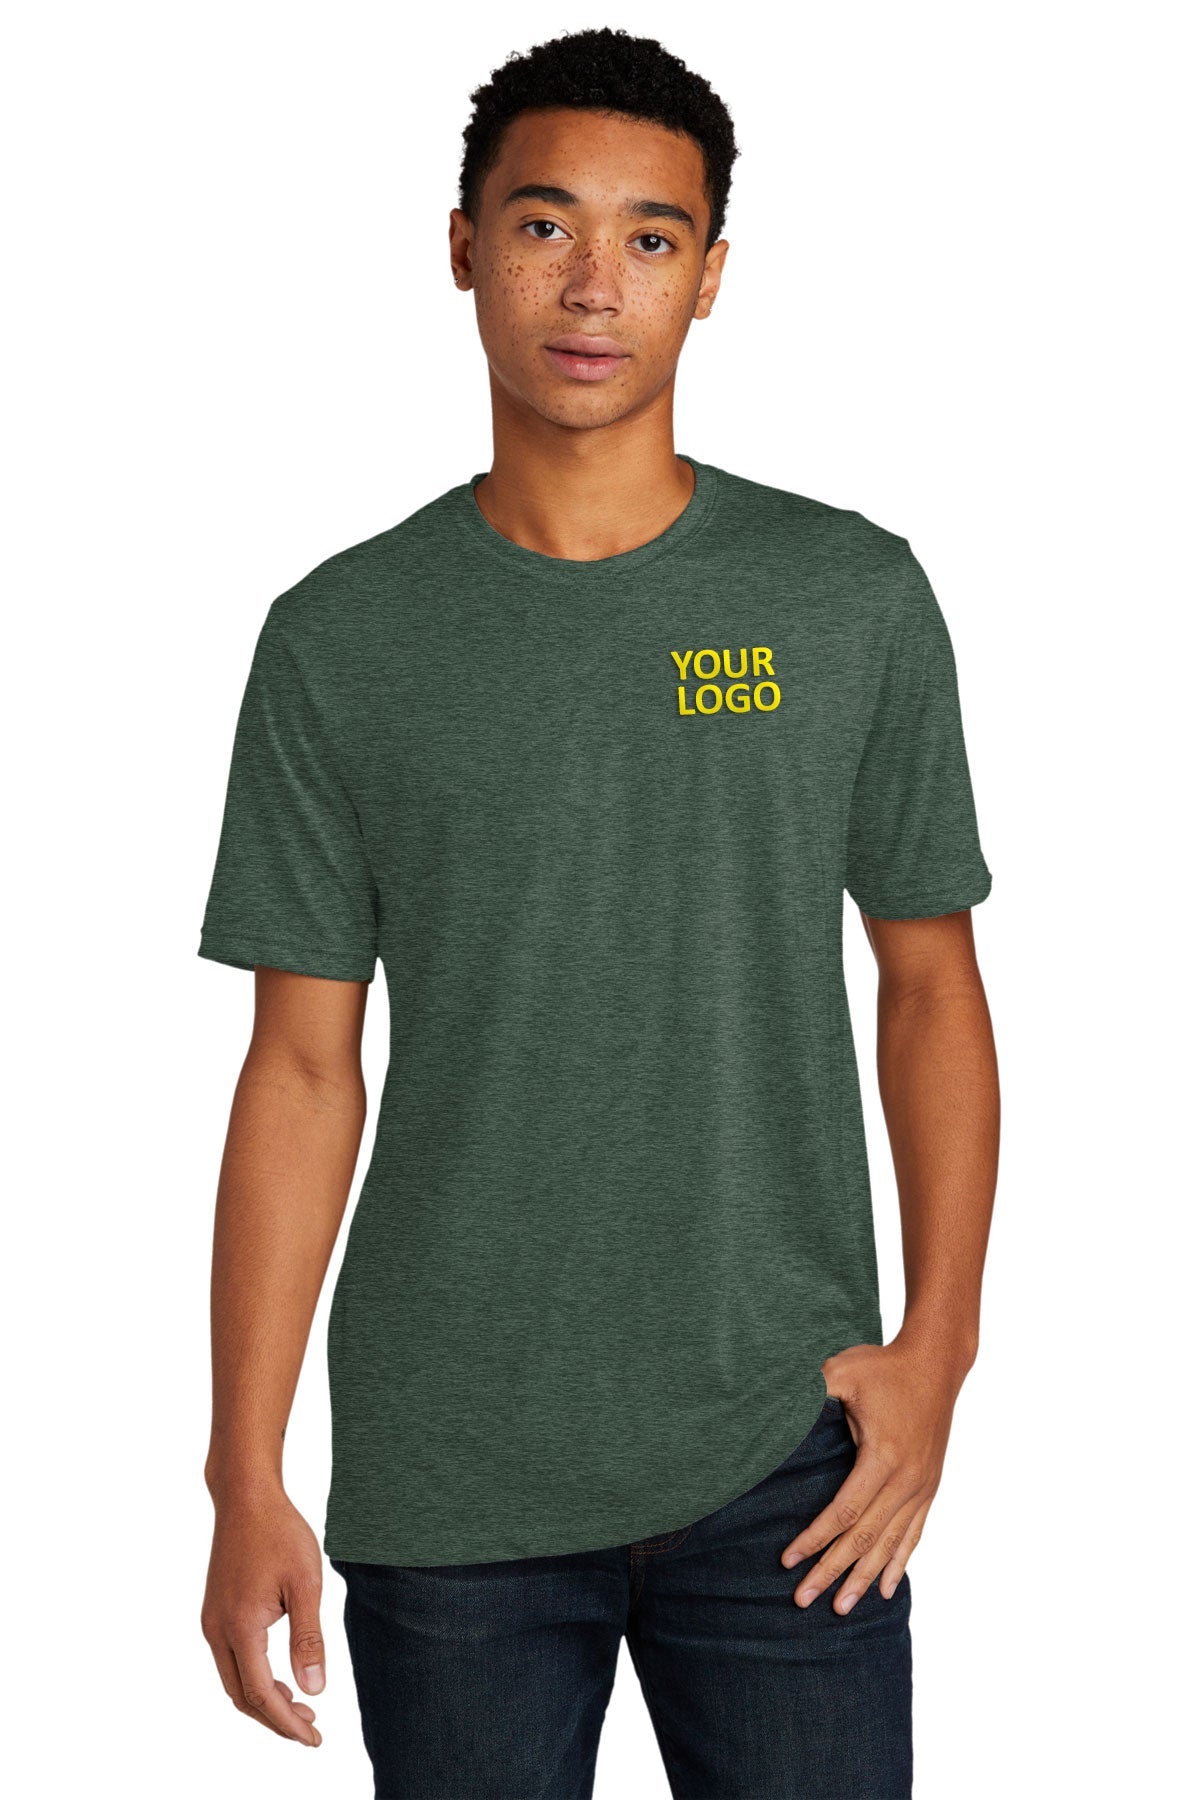 Next Level Unisex Poly Cotton Custom T-Shirts, Royal Pine